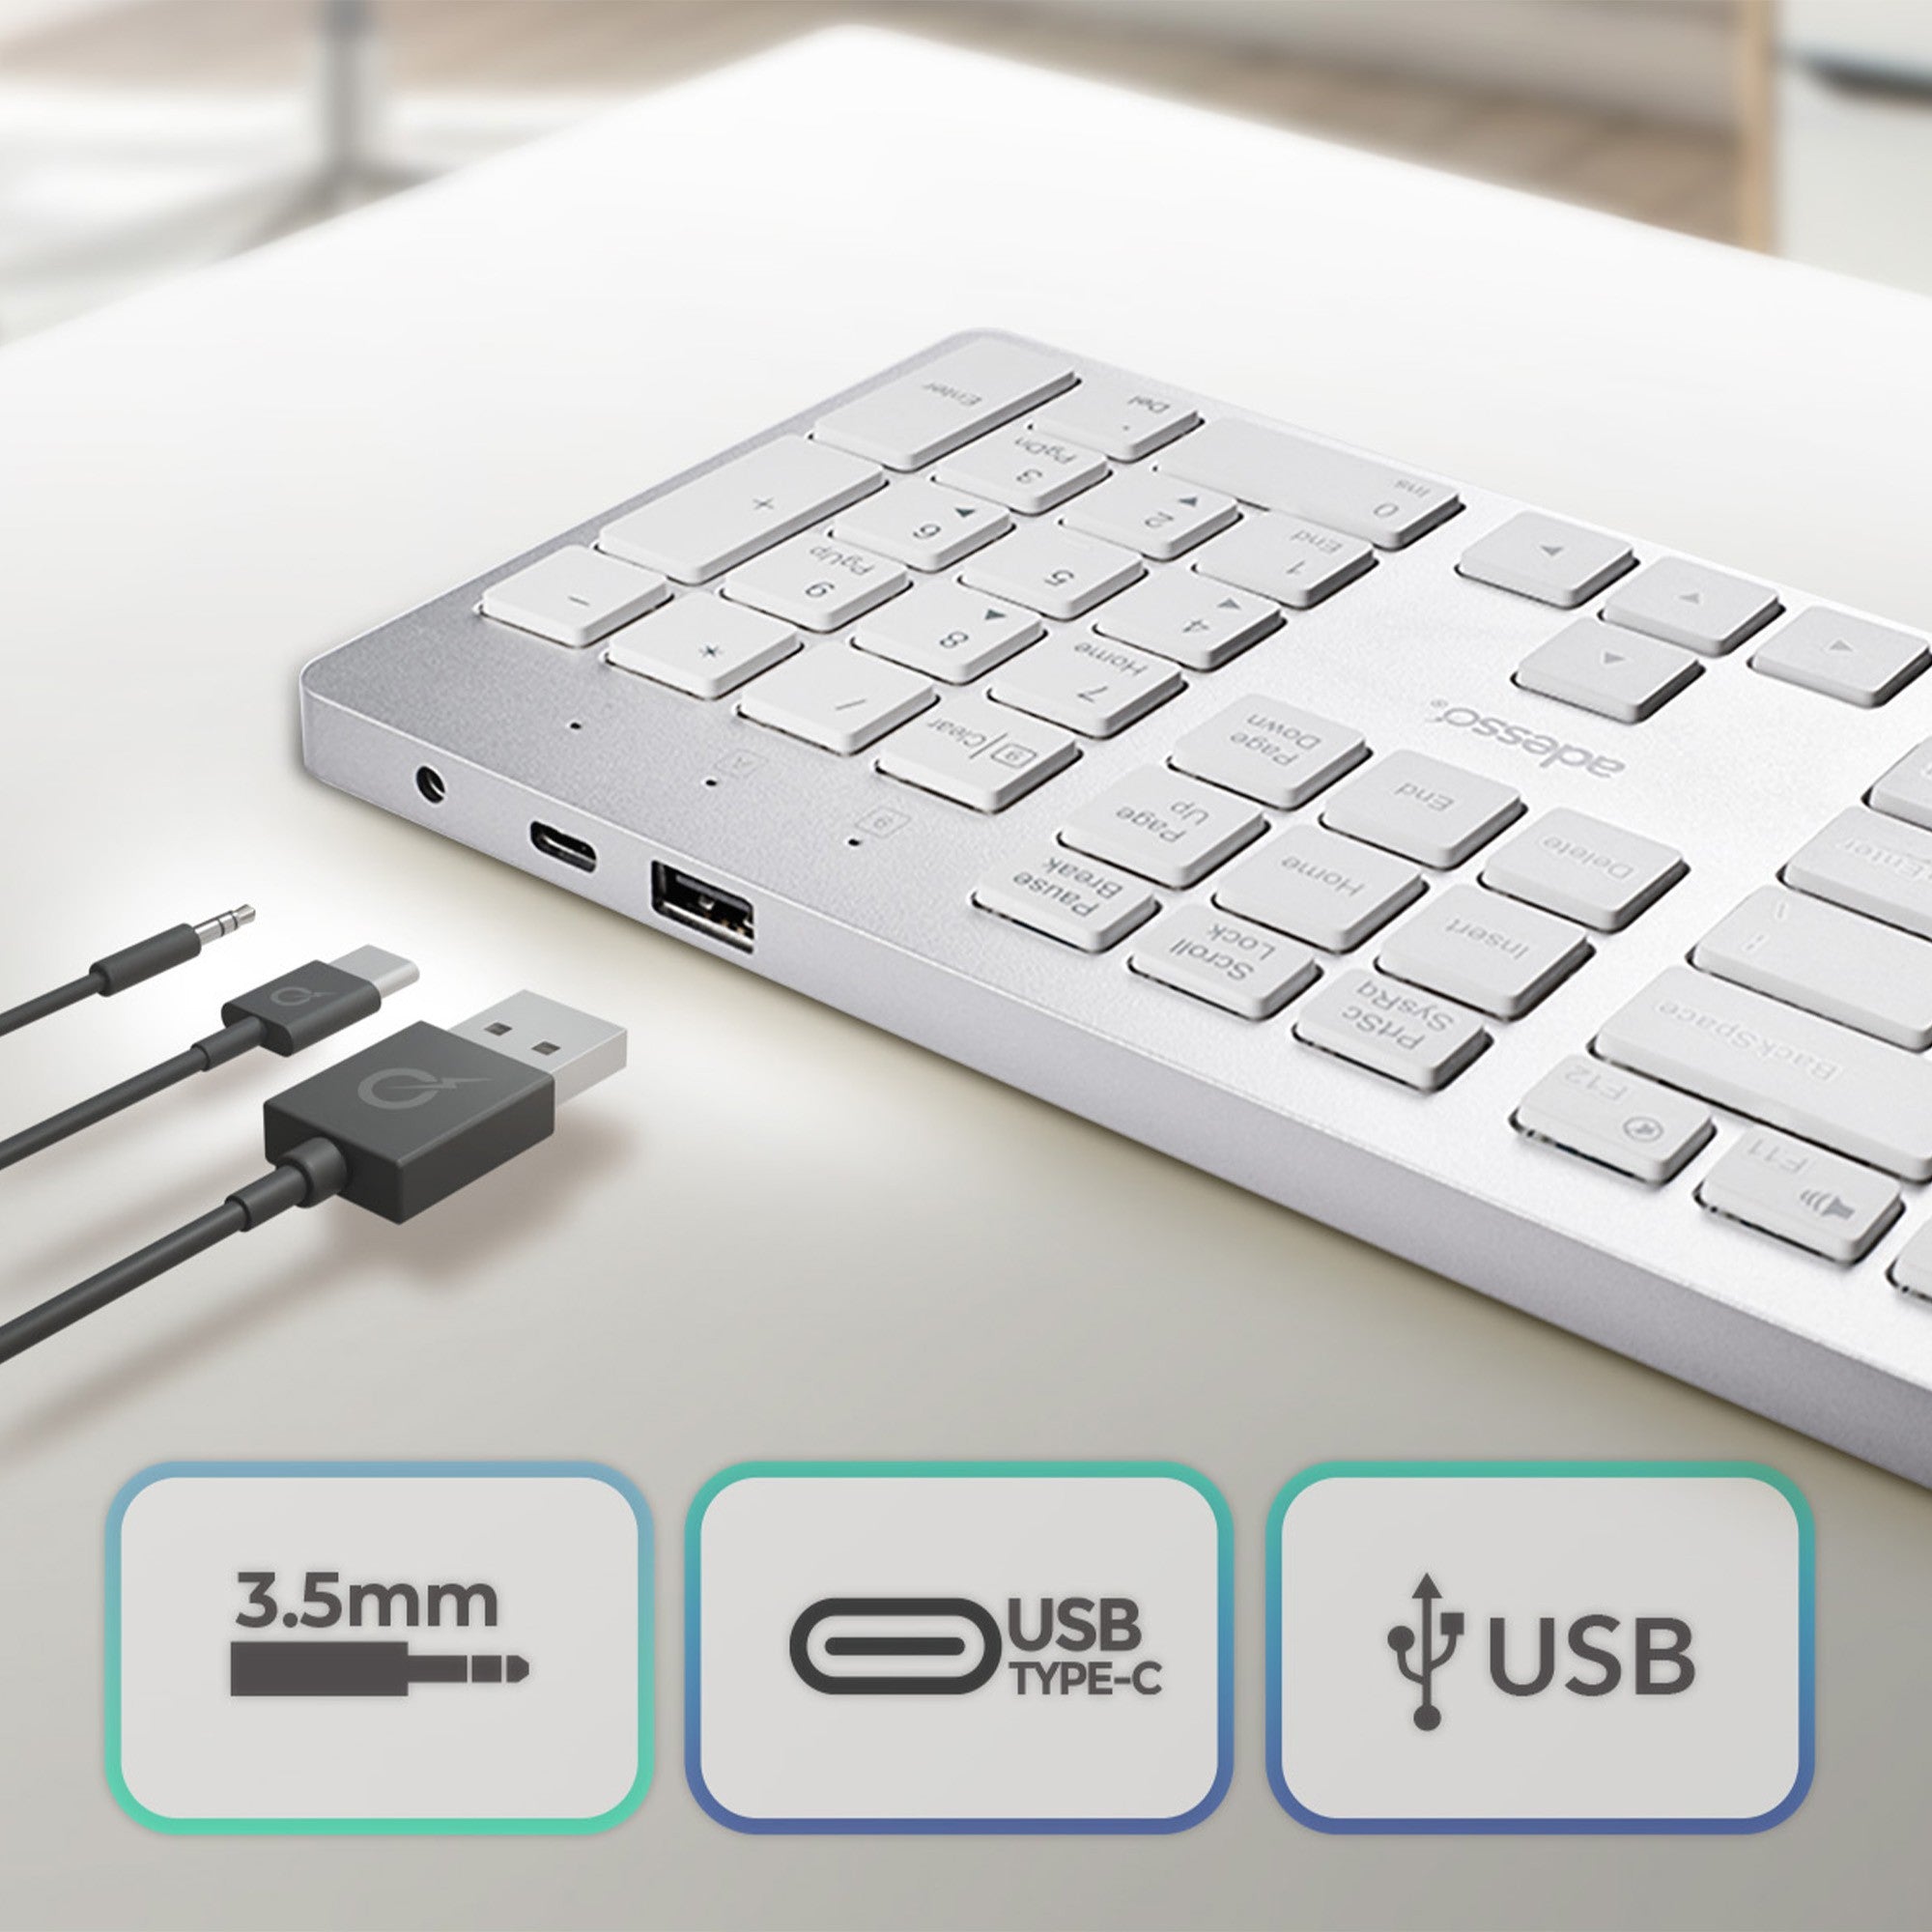 Adesso Multi-OS Scissor switch Desktop keyboard - White - 15-12856